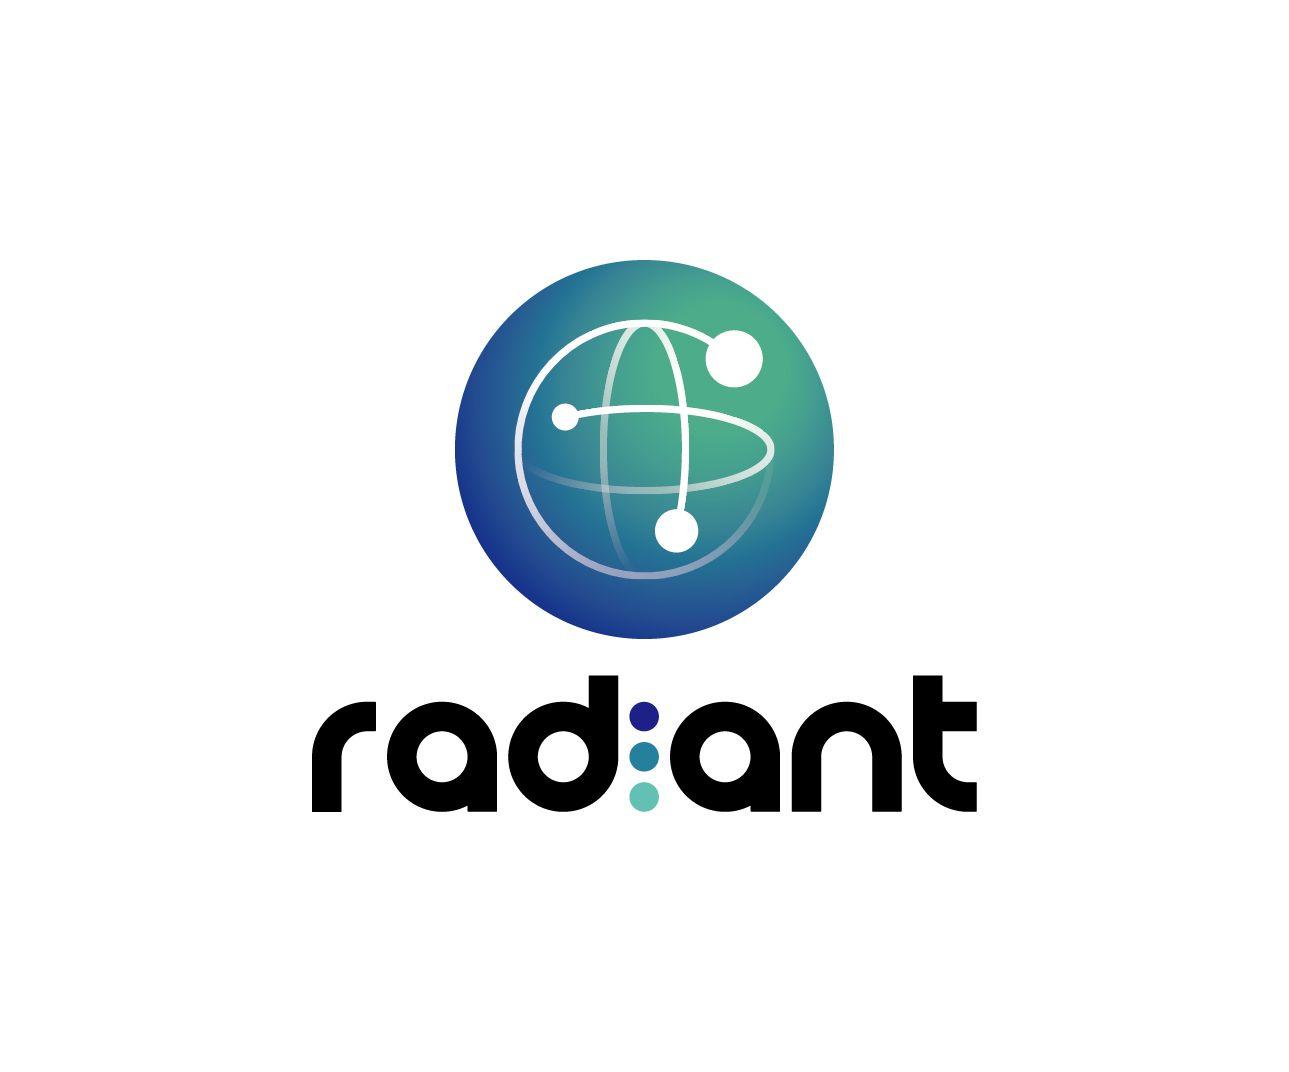 Radiant Logo - Radiant Logo Design 2016. JamesChou Produce. Logos Design, Logos